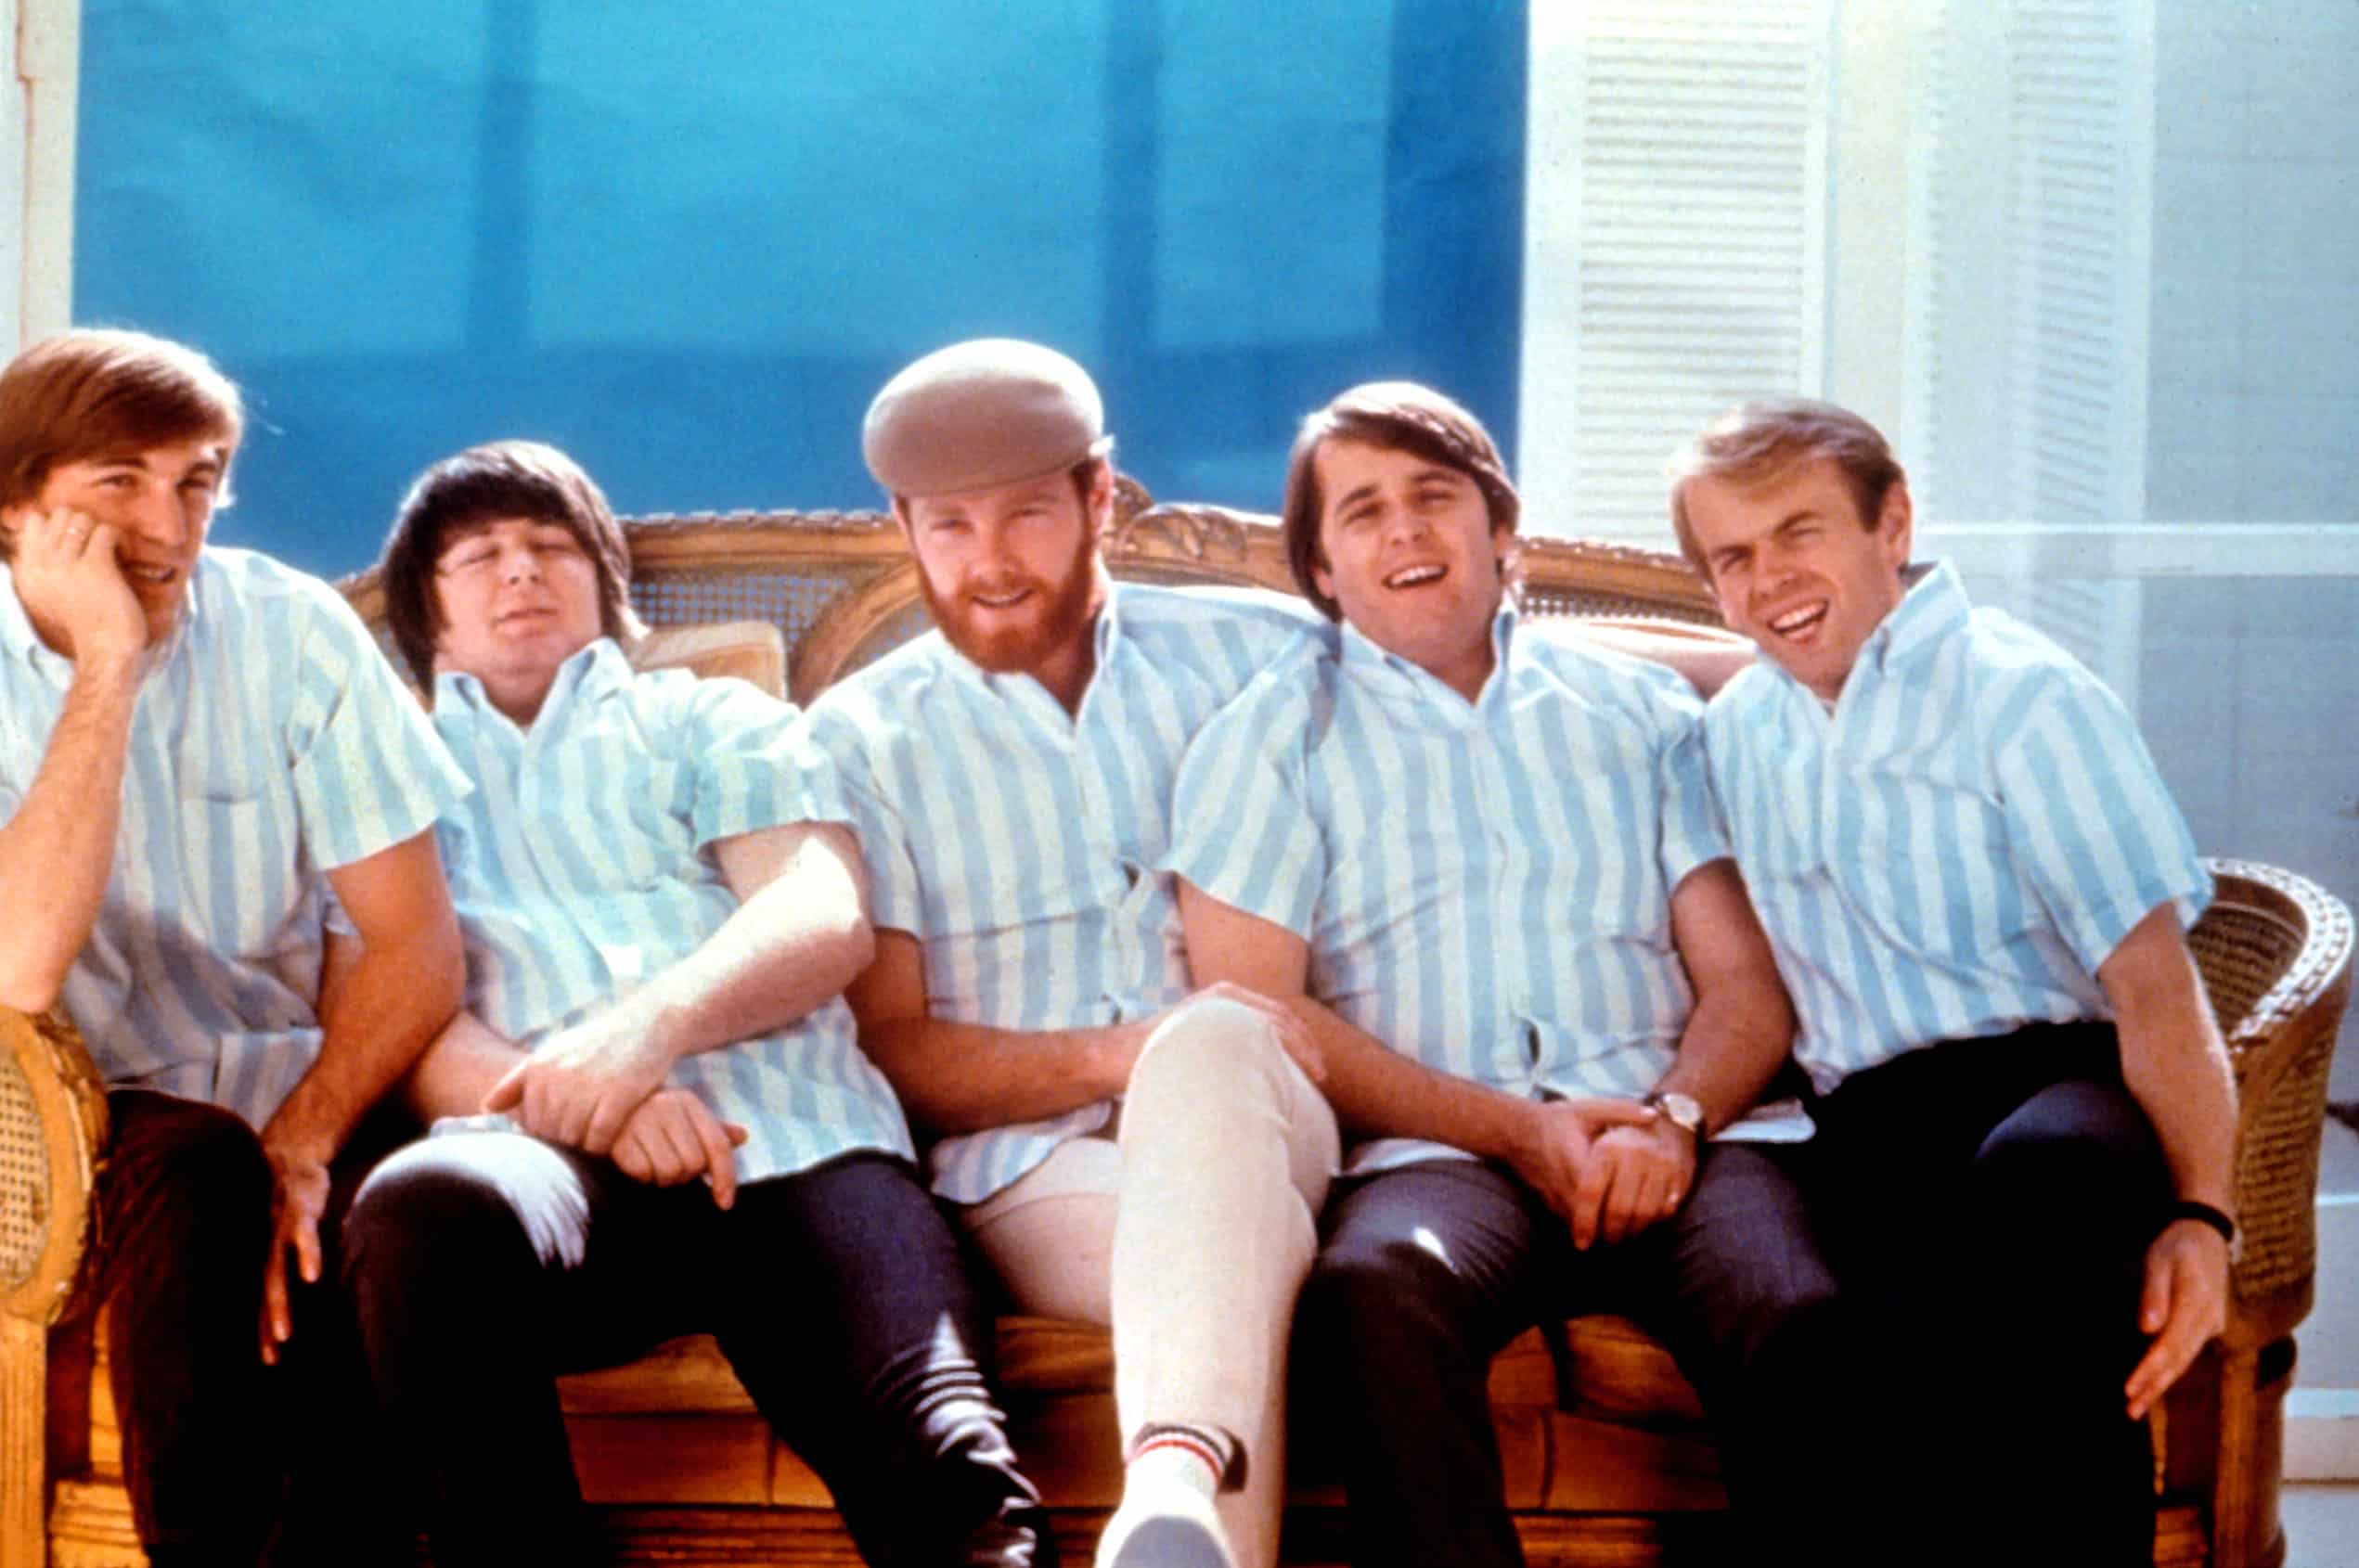 BEACH BOYS, Dennis Wilson, Brian Wilson, Mike Love, Carl Wilson, Al Jardine, mid-1960s